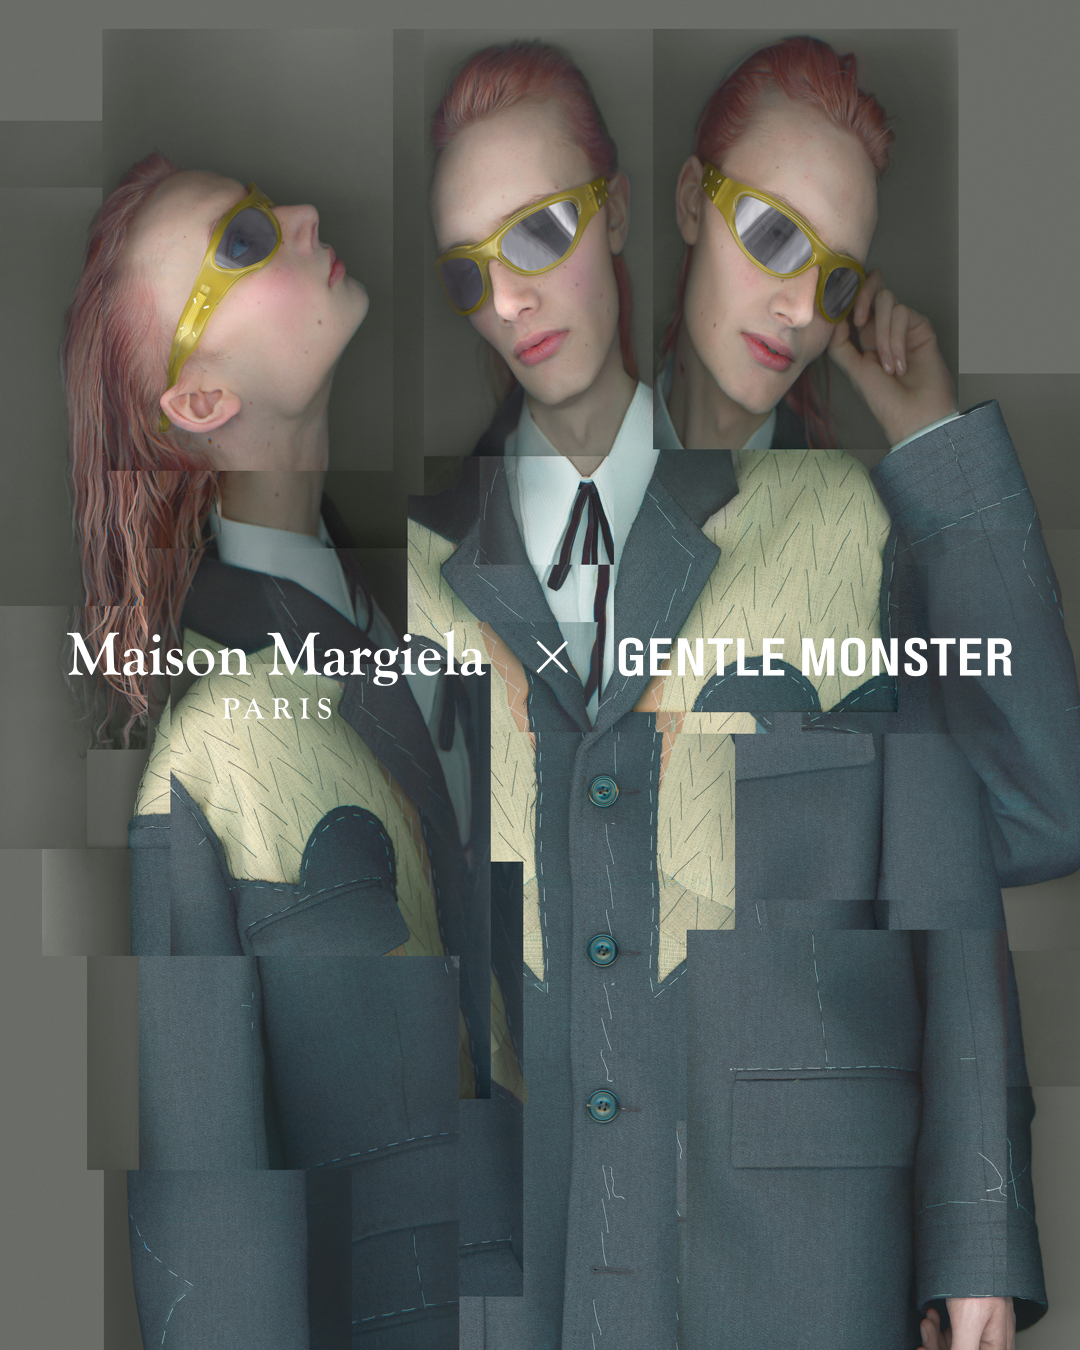 Maison Margiela x Gentle Monster Crafts a New 'Créature' - V Magazine